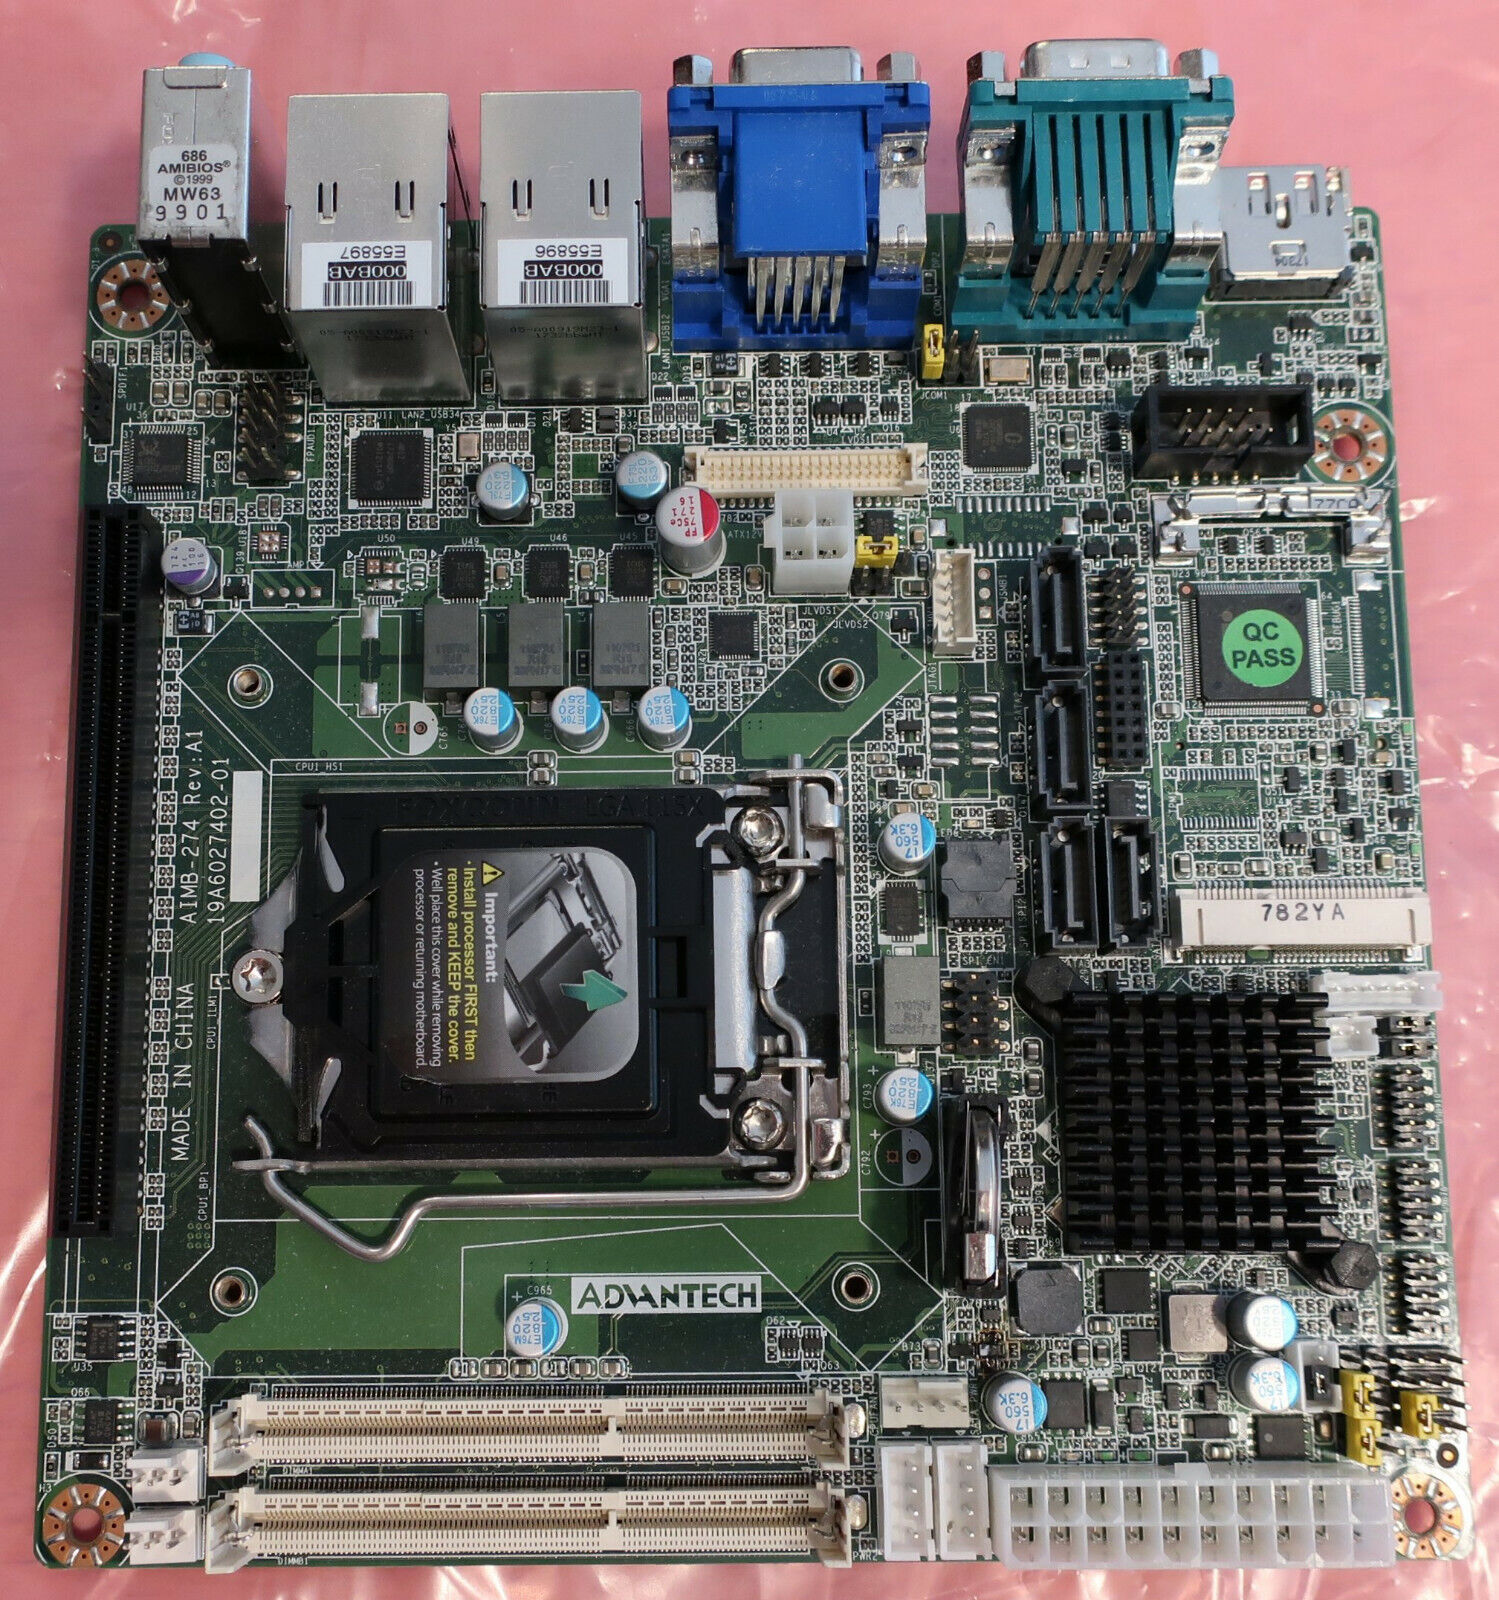 Advantech AIMB 274 LGA1150 Mini ITX Industrial Motherboard Dual LAN - USA Seller